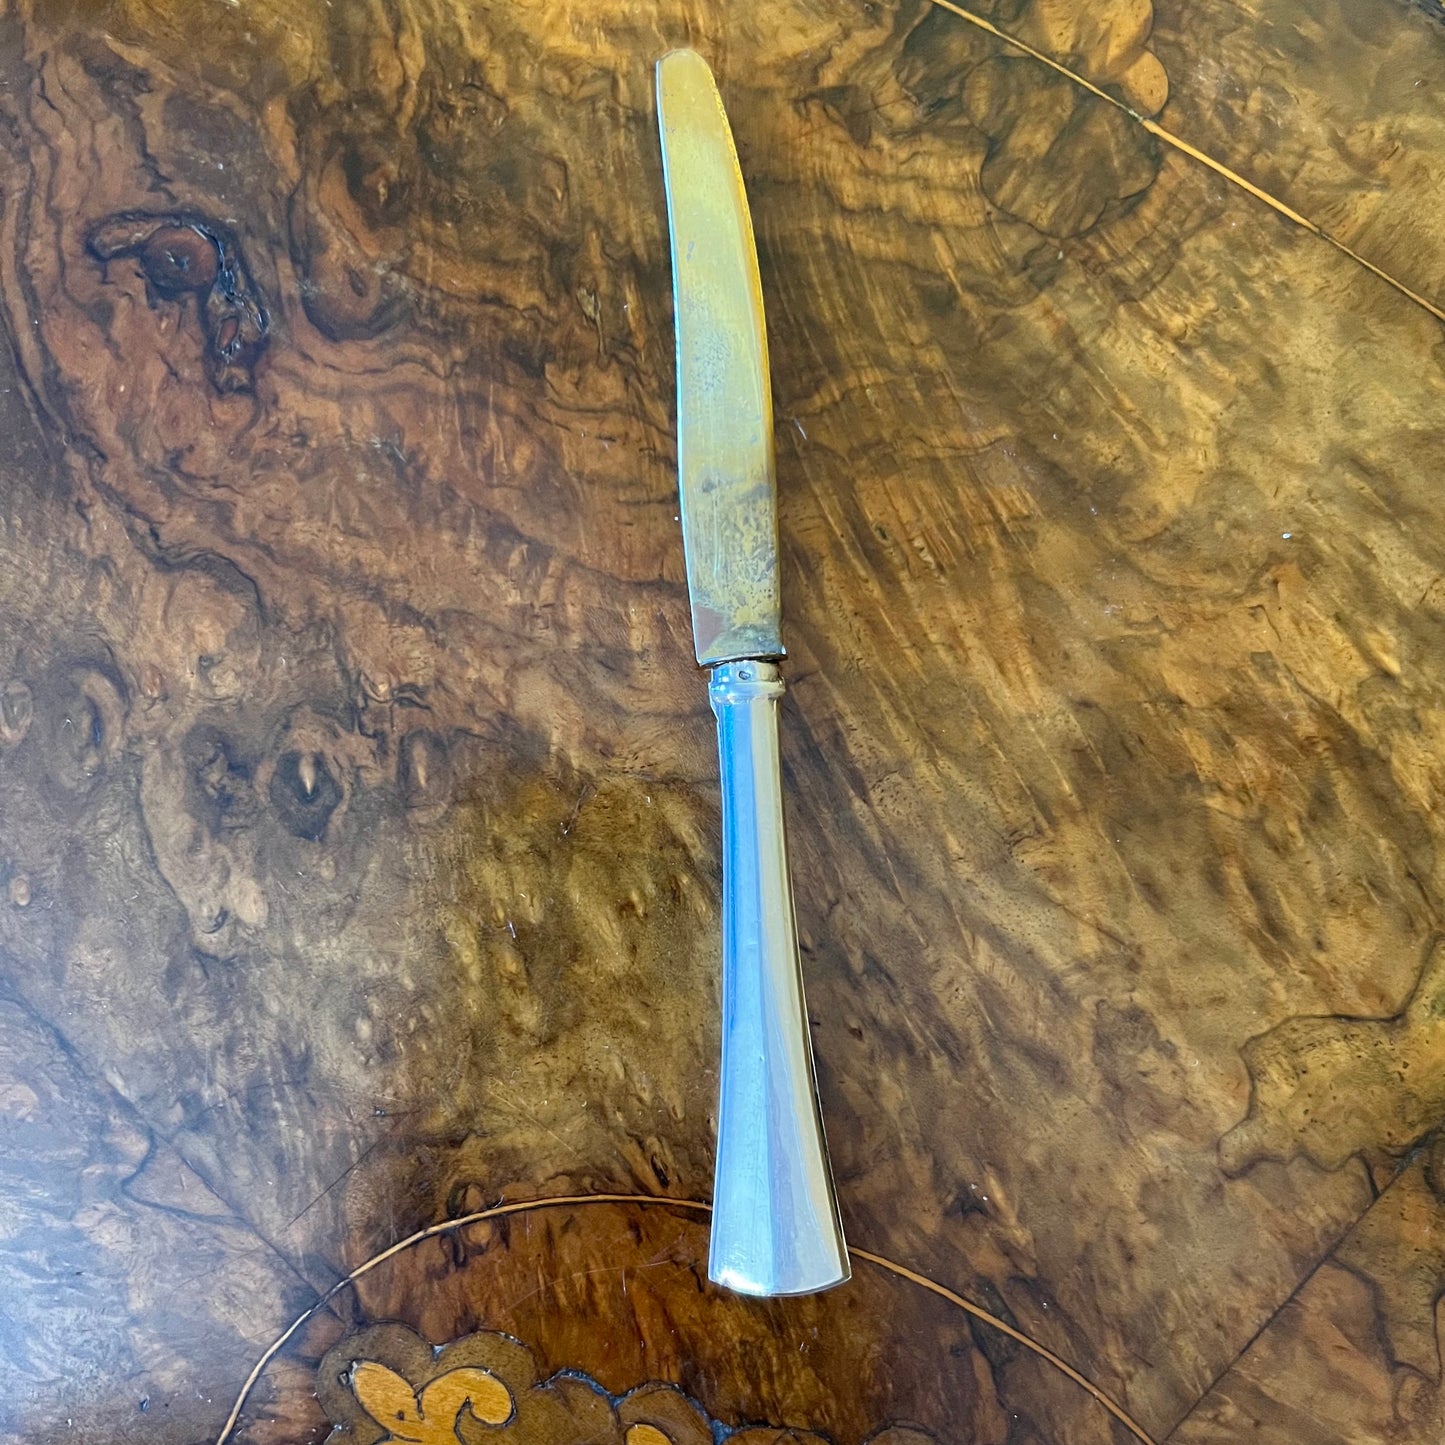 Antique Austrian Desert Knives & Forks Set 800 Silver Handles